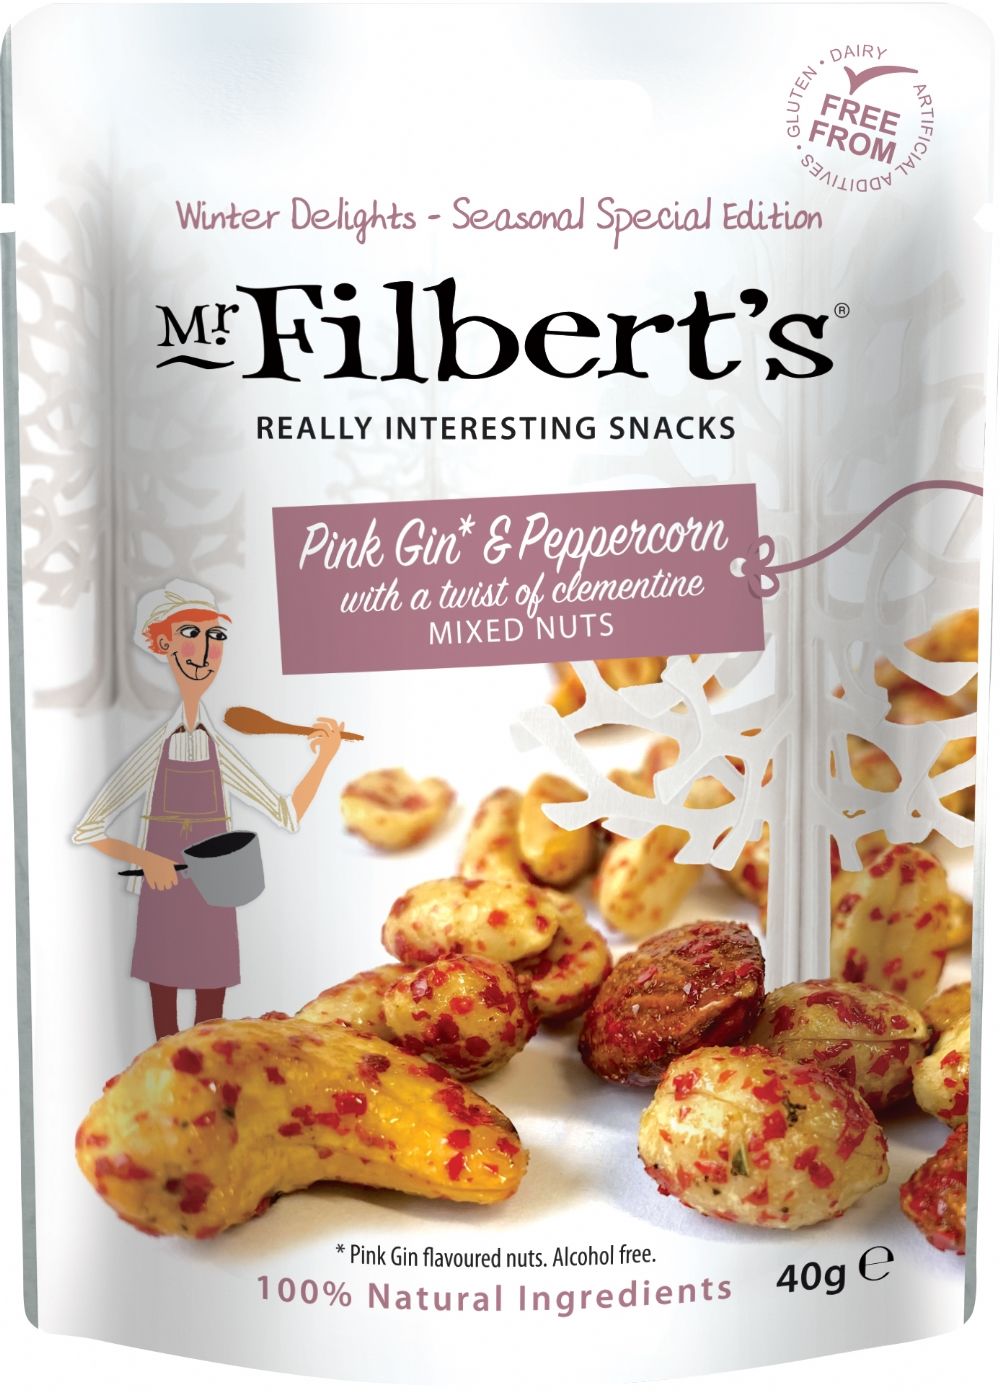 Mr Filbert's Pink Gin & Peppercorn Nuts